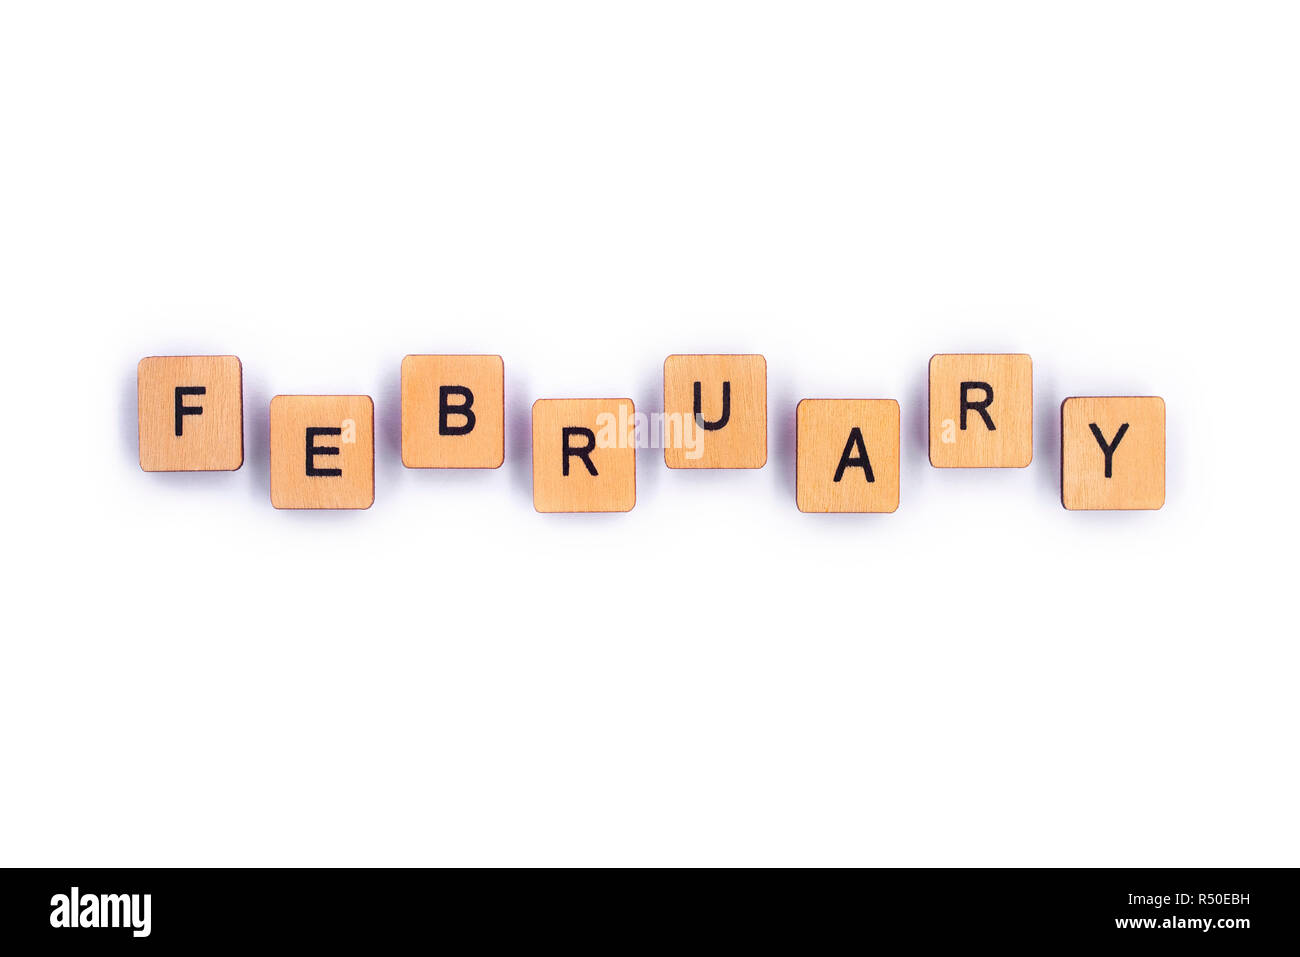 FEBRUARY, spelt with wooden letter tiles over a plain white background. Stock Photo